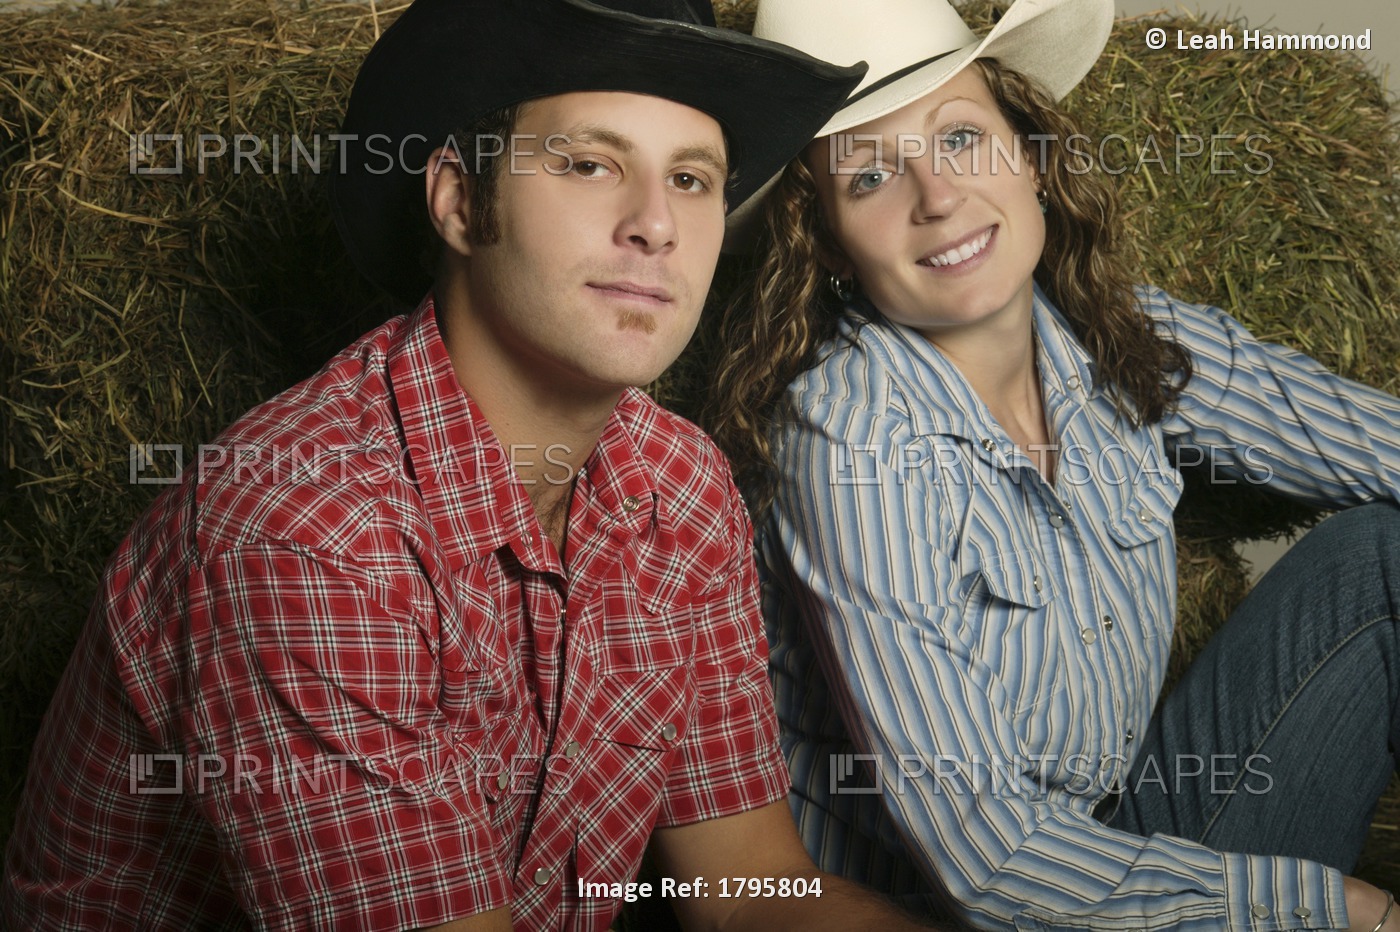 Couple Wearing Western Clothing